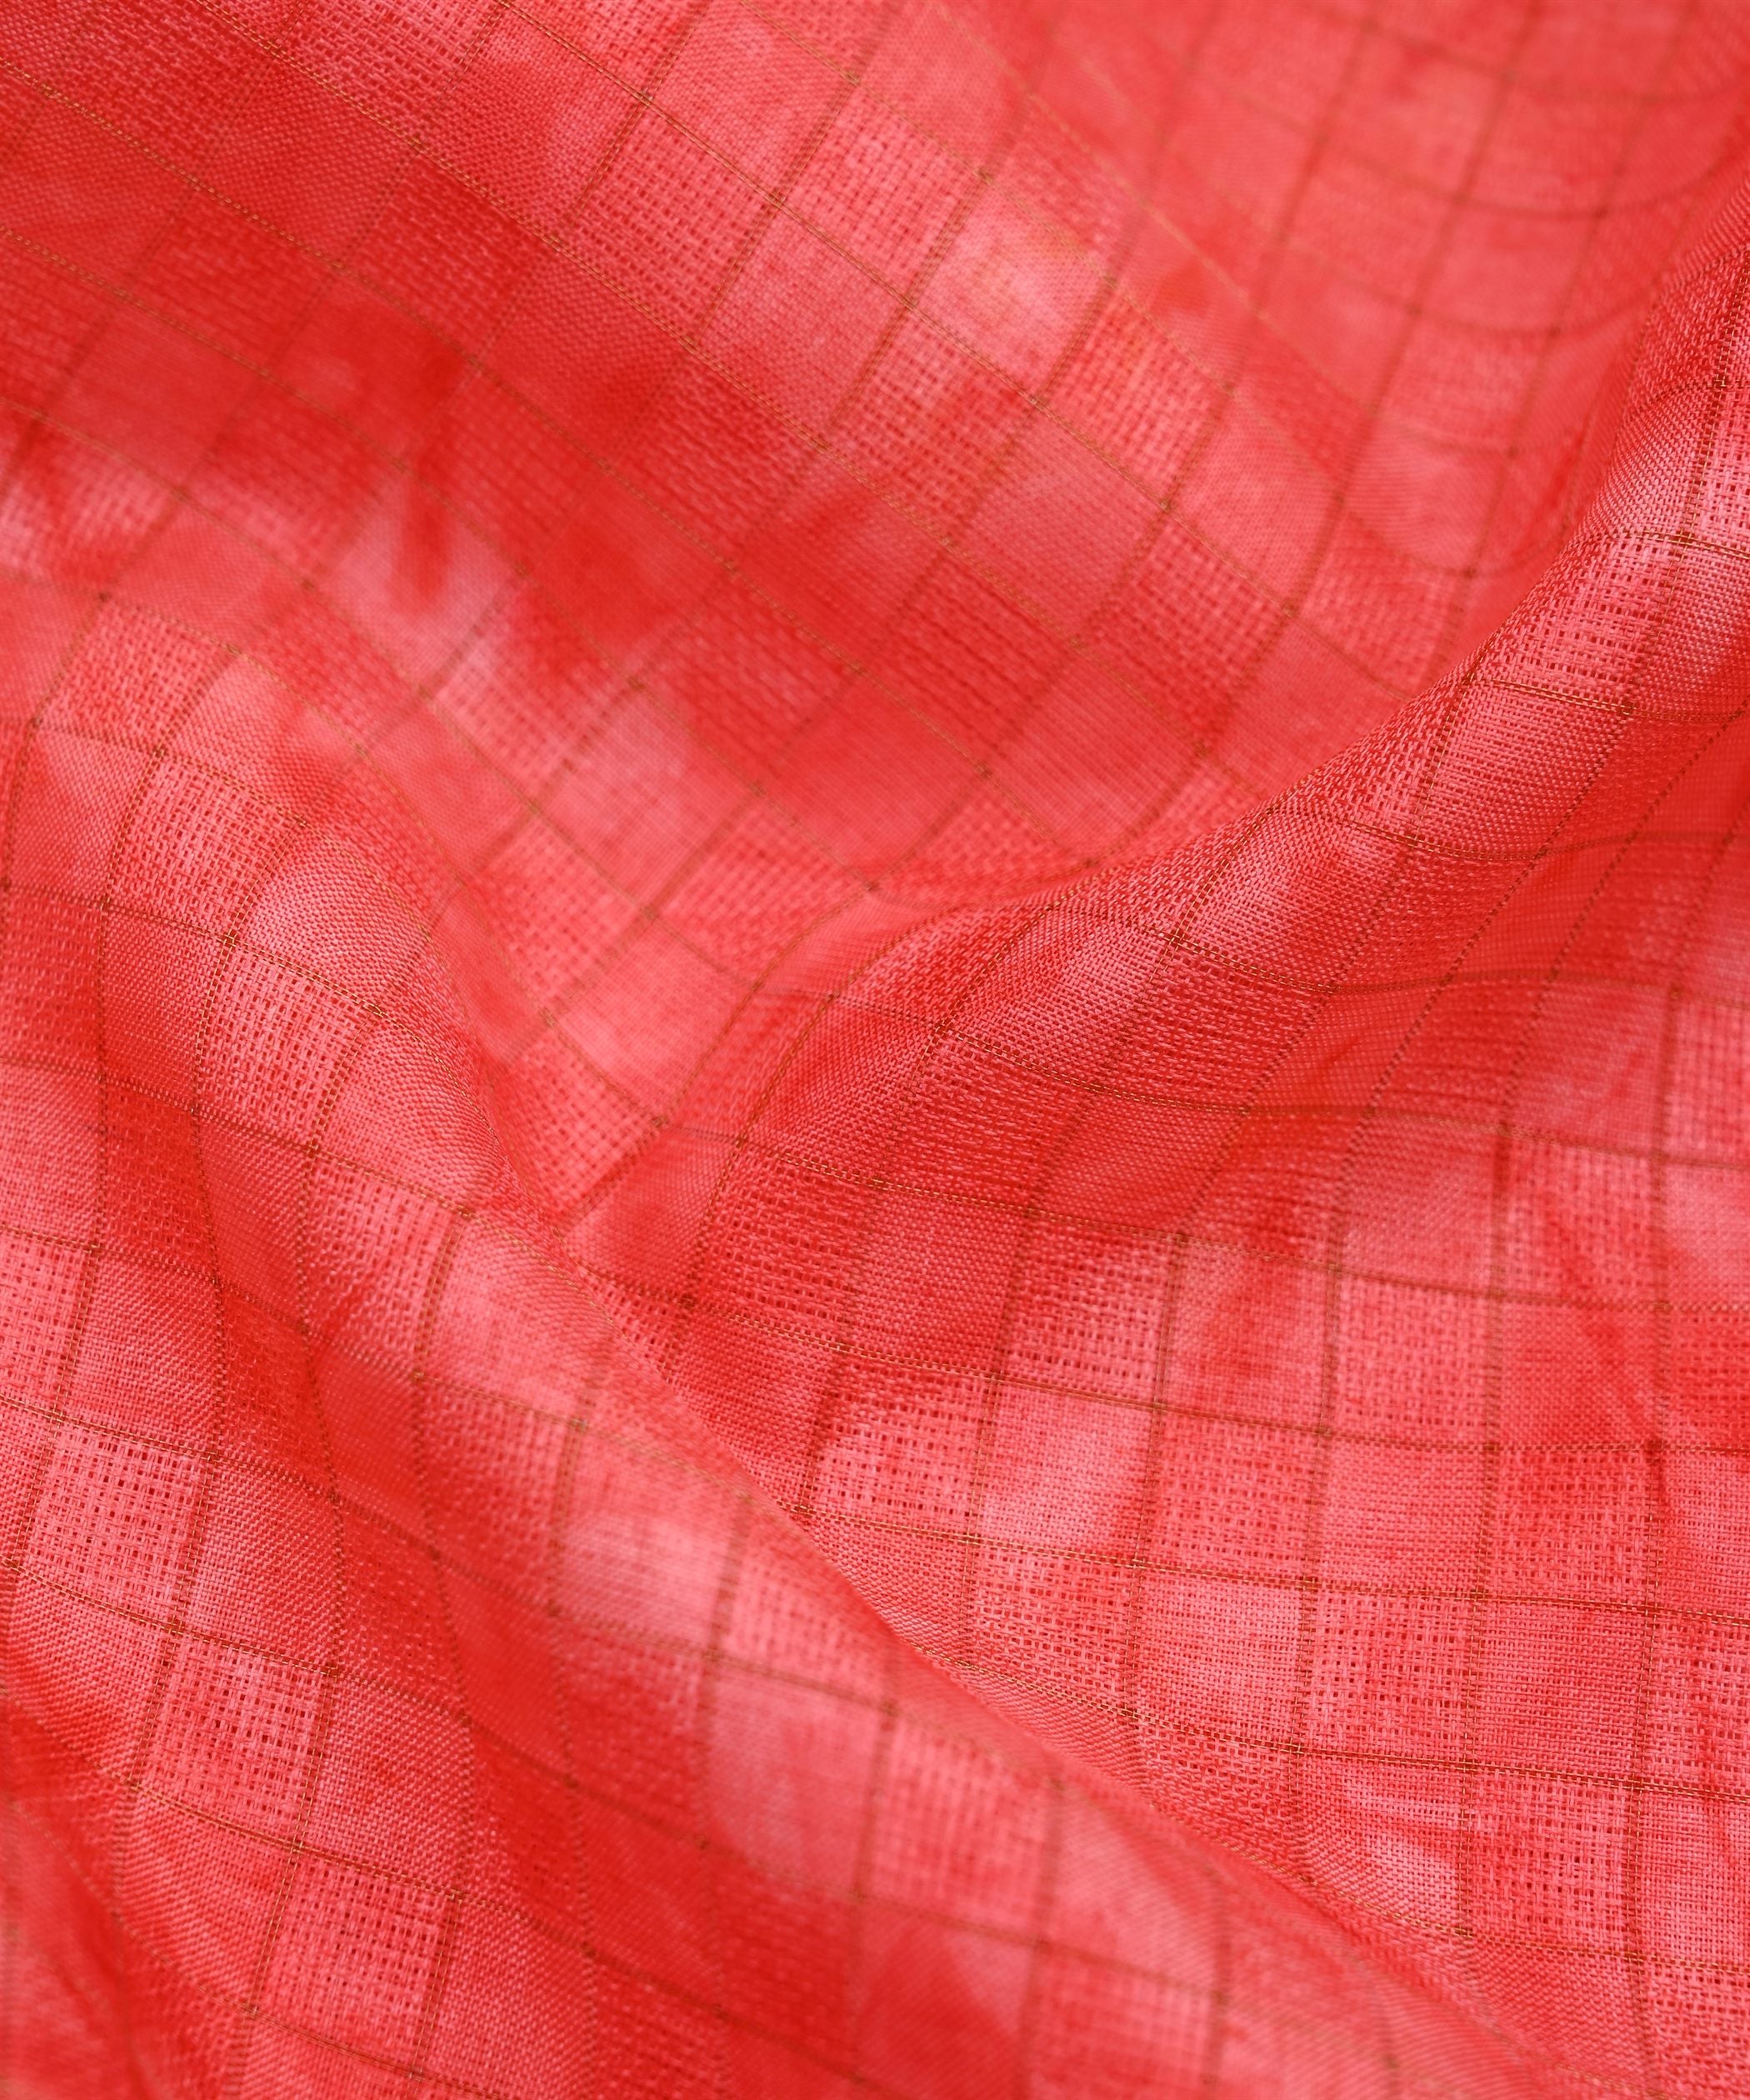 Reddish Pink Jute Fabric with Checks and Shibori Print